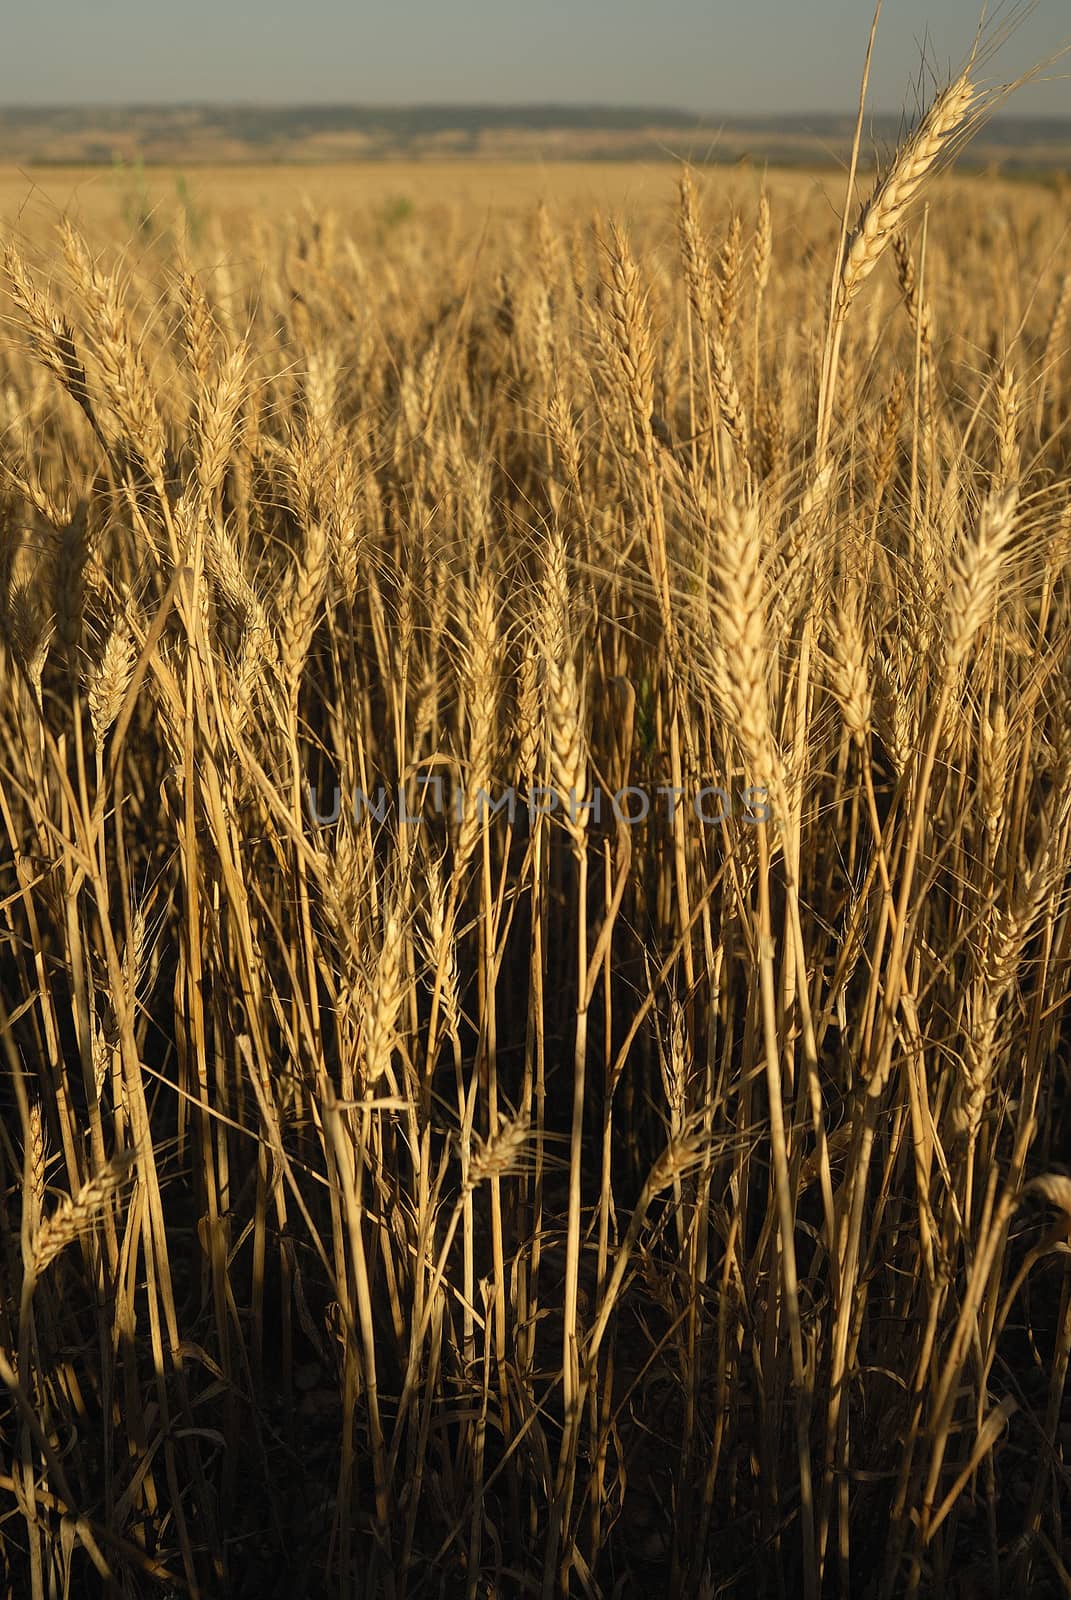 Triticum aestivum,Wheat, Allergens Plants  by jalonsohu@gmail.com